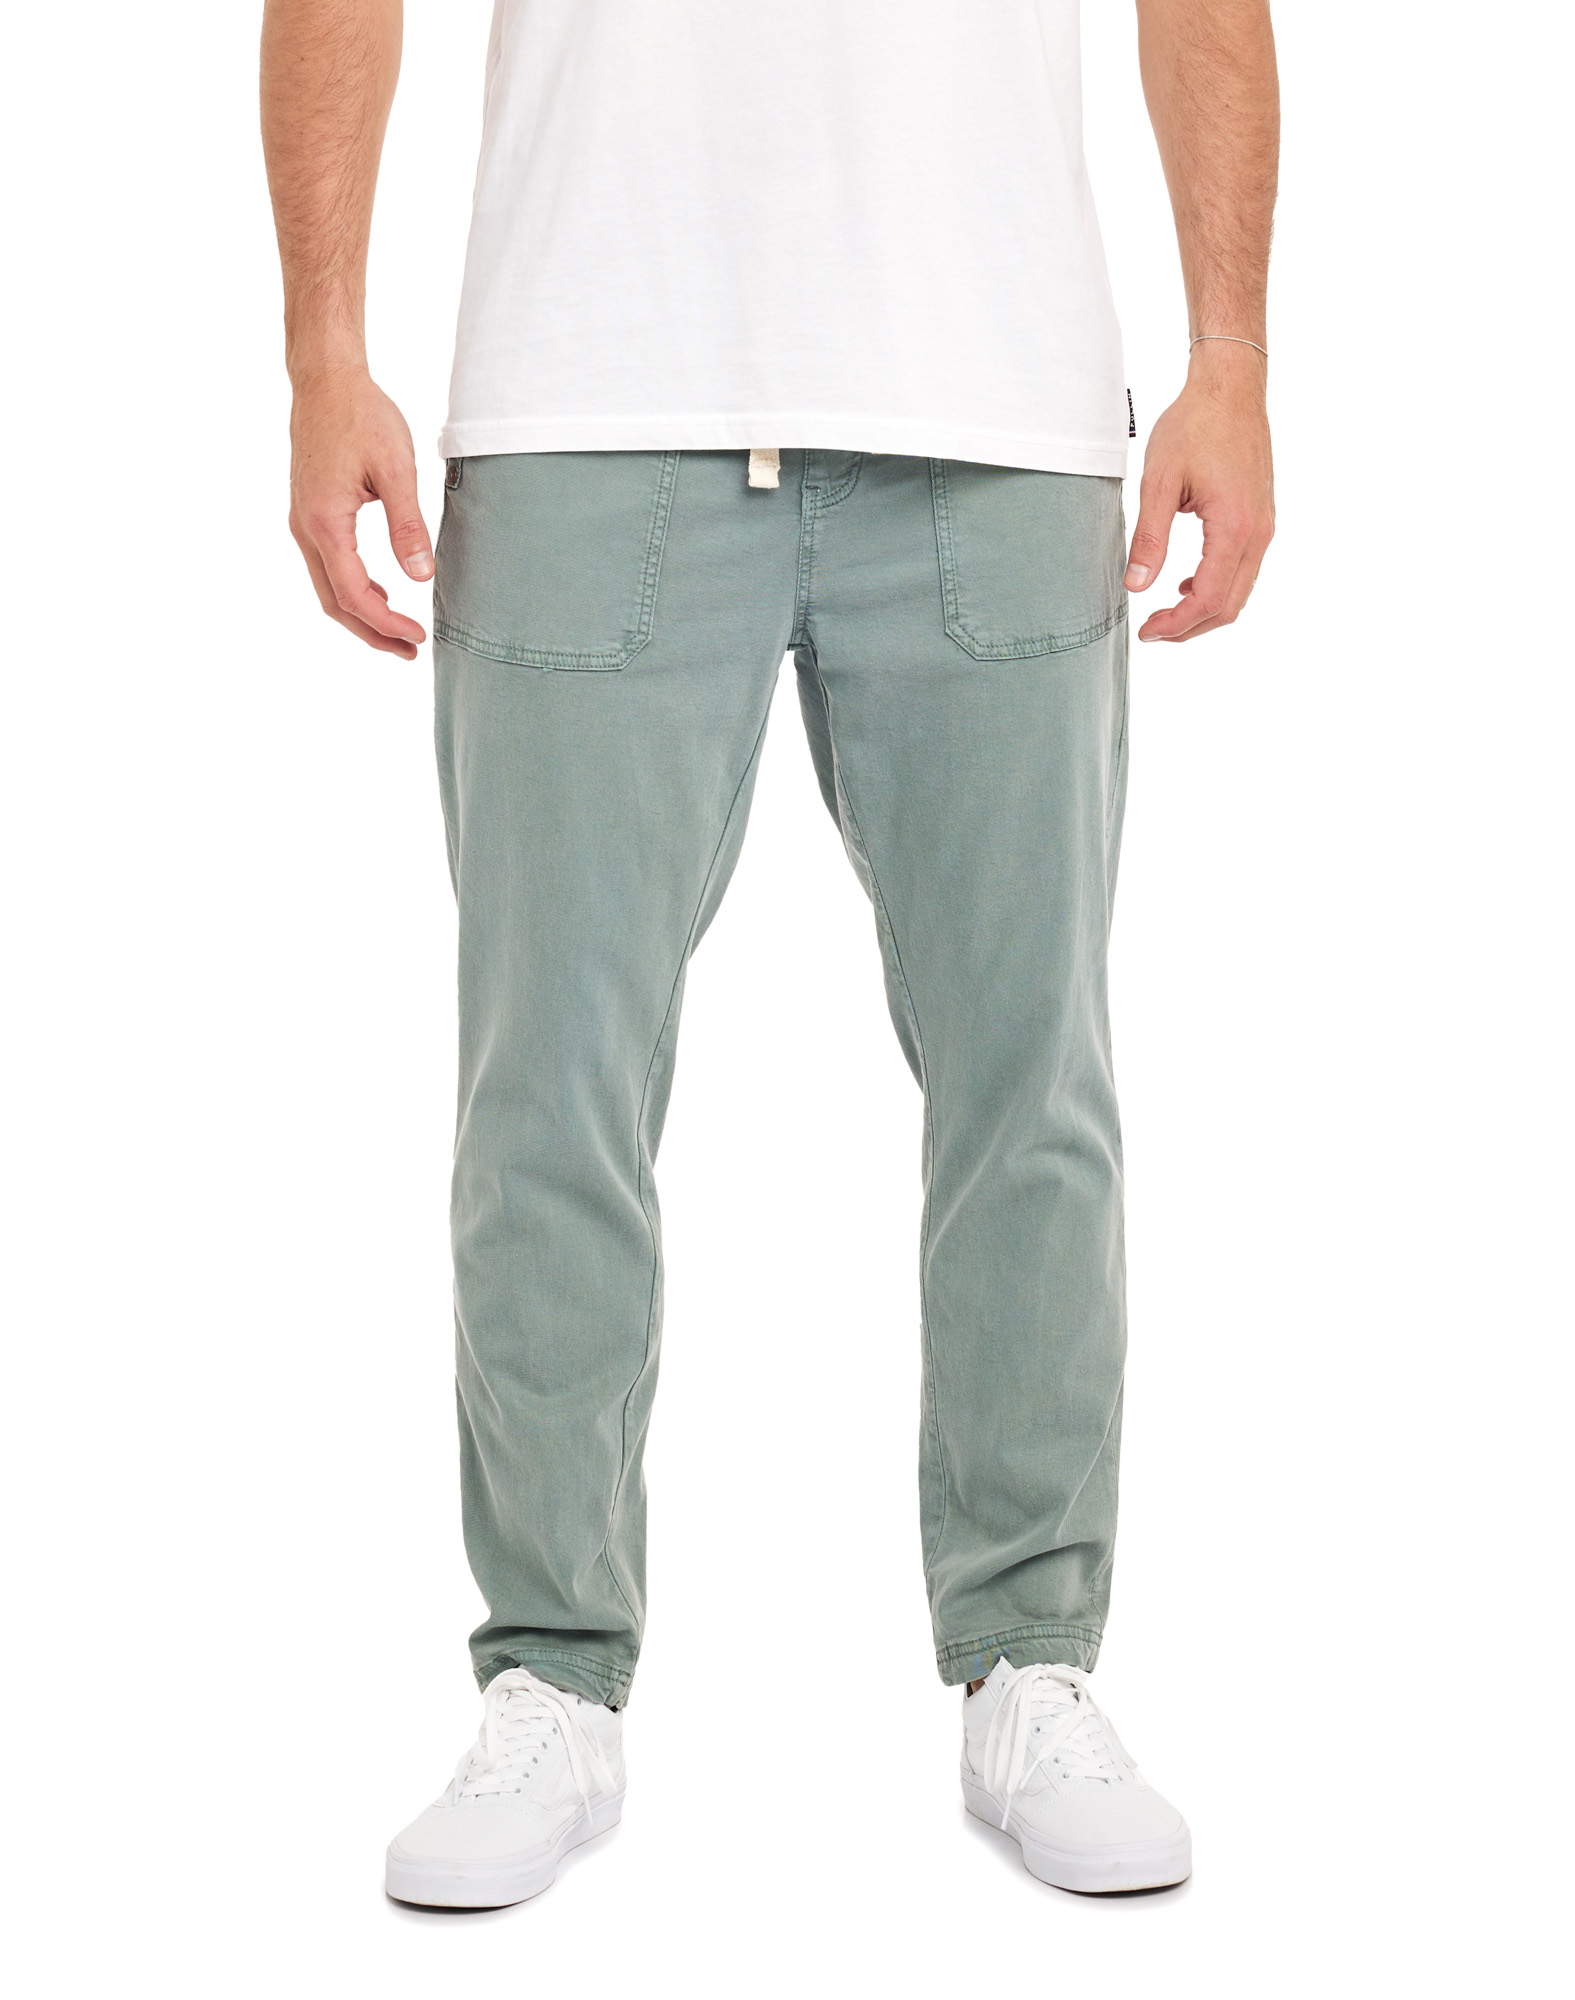 Buy Green Trouser Pieces for Men by Bigreams.com Online | Ajio.com